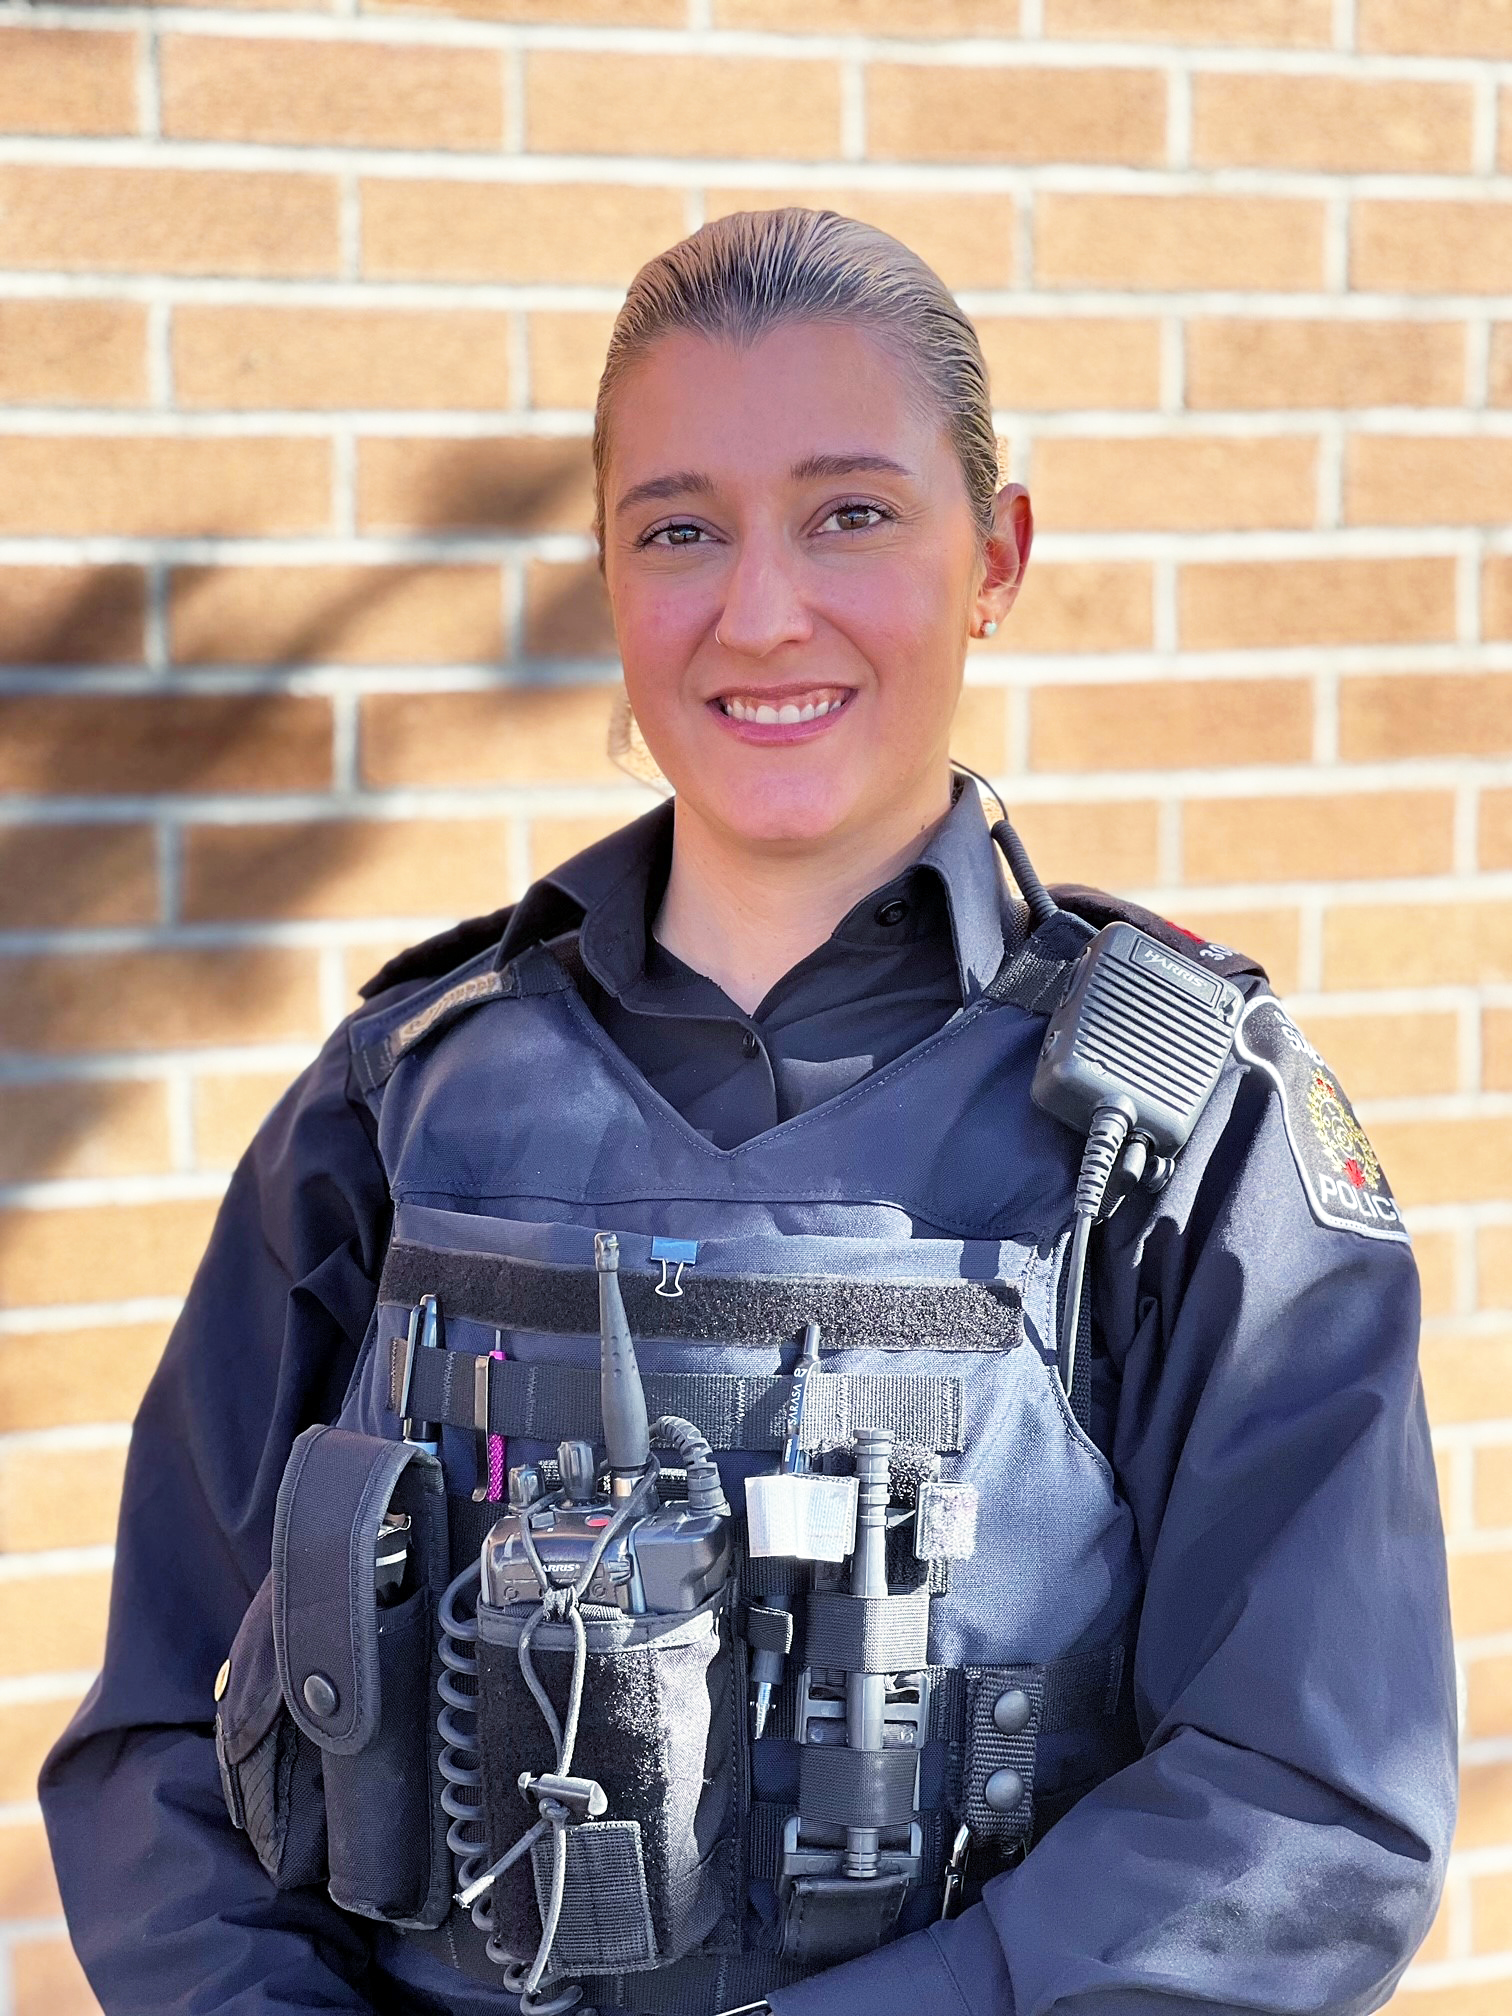 female police officer in uniform smiling